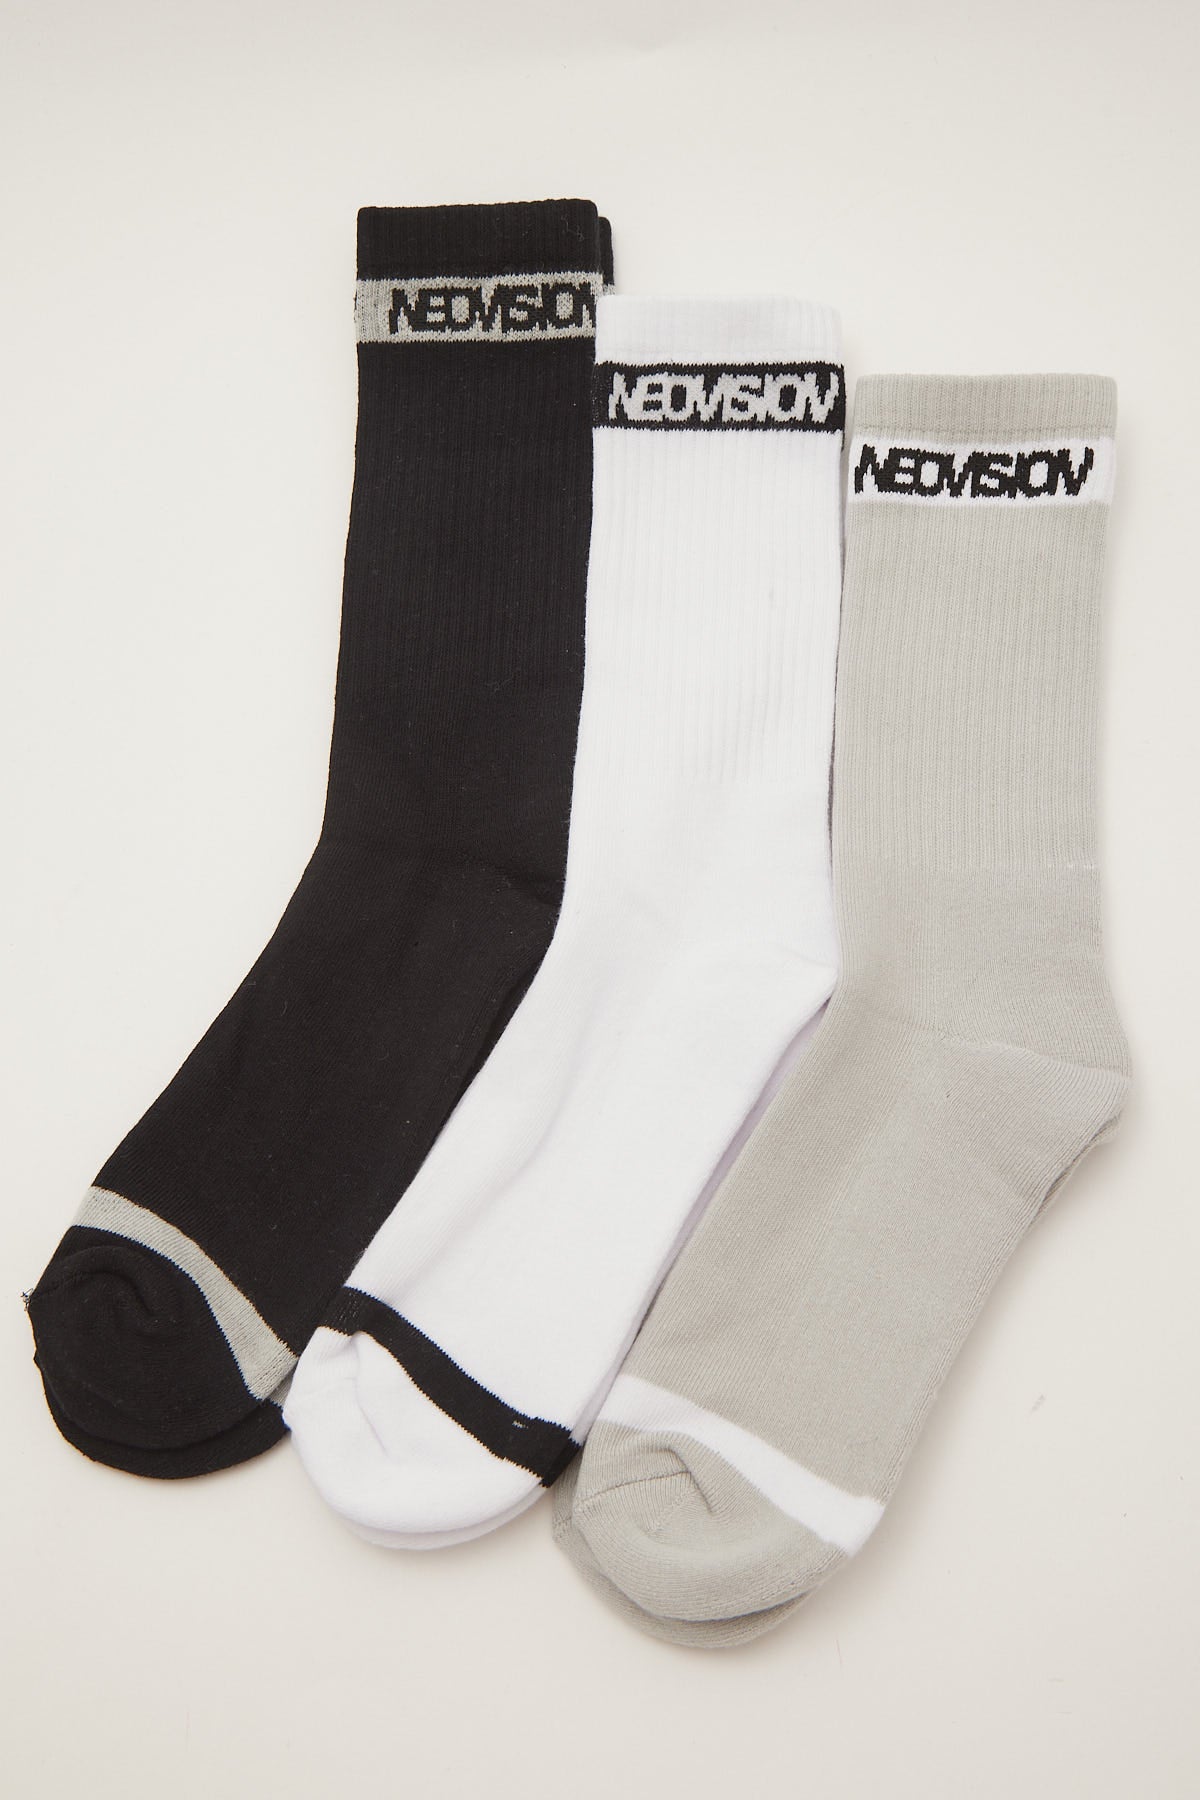 Neovision Traction Sock 3 Pack Black/White/Grey